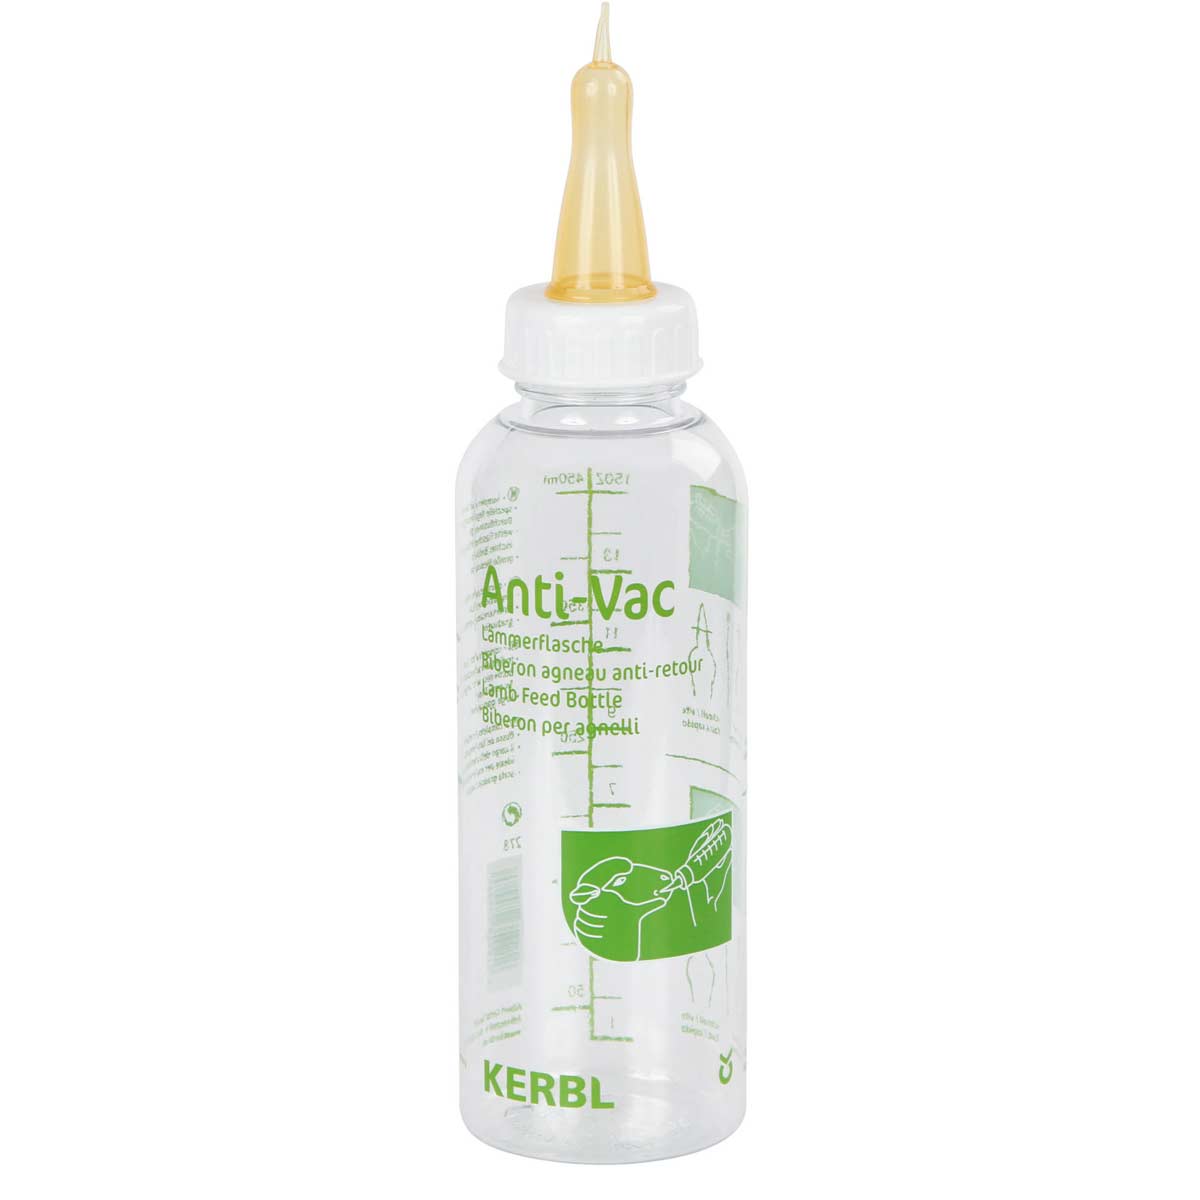 Lämmerflasche Plexiglas ANTI-VAC 500 ml